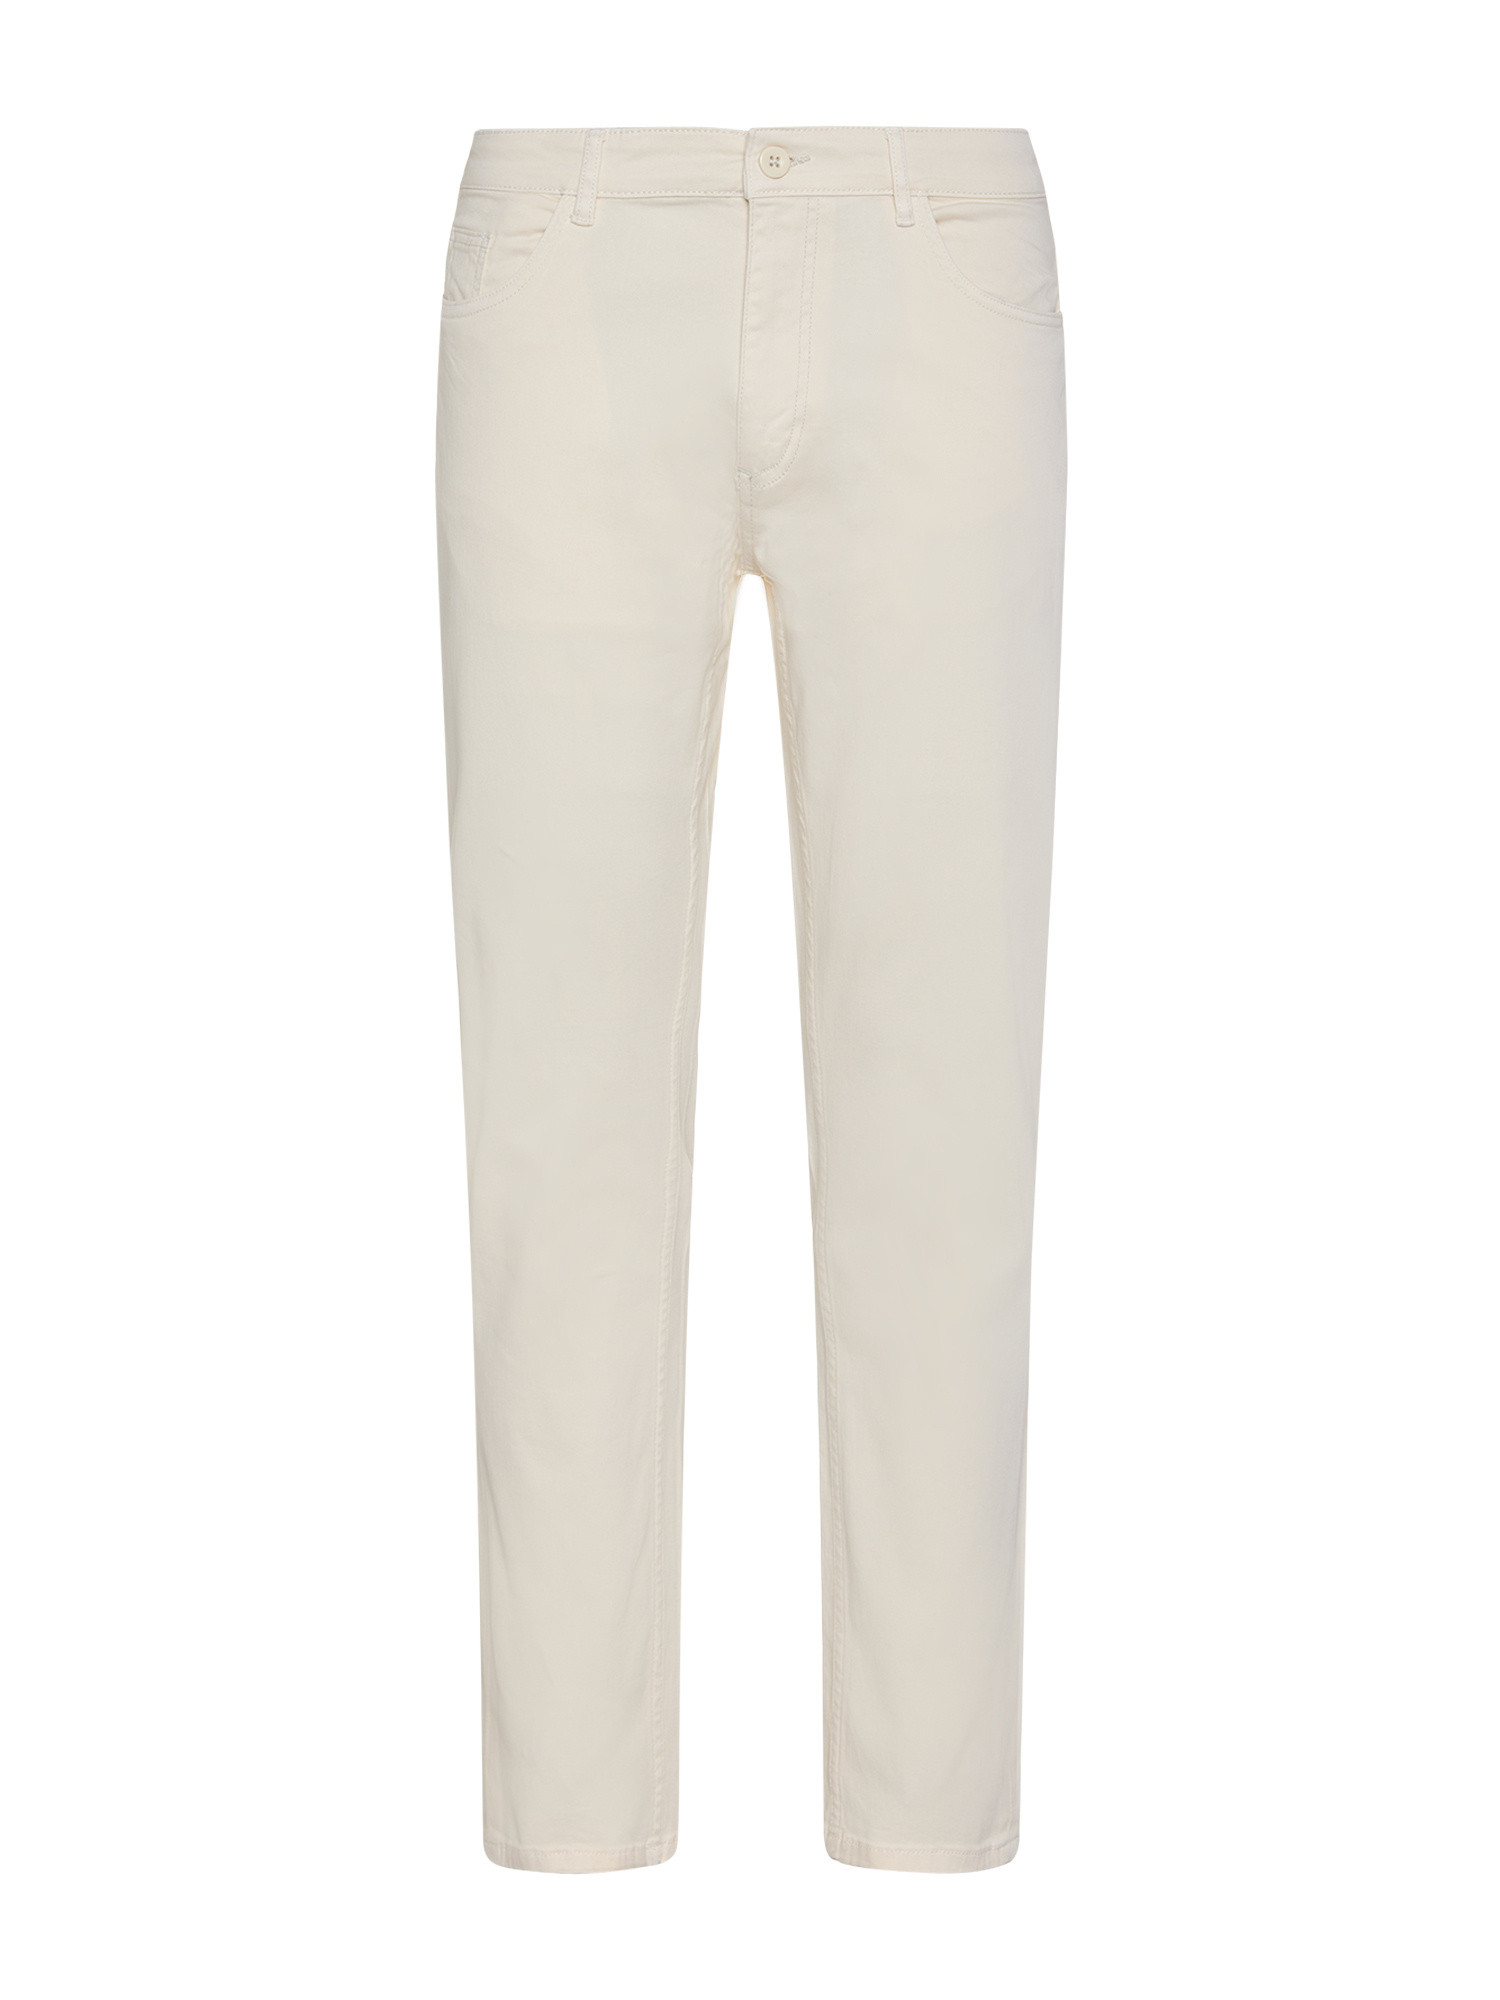 JCT - Pantaloni slim fit cinque tasche, Bianco panna, large image number 0